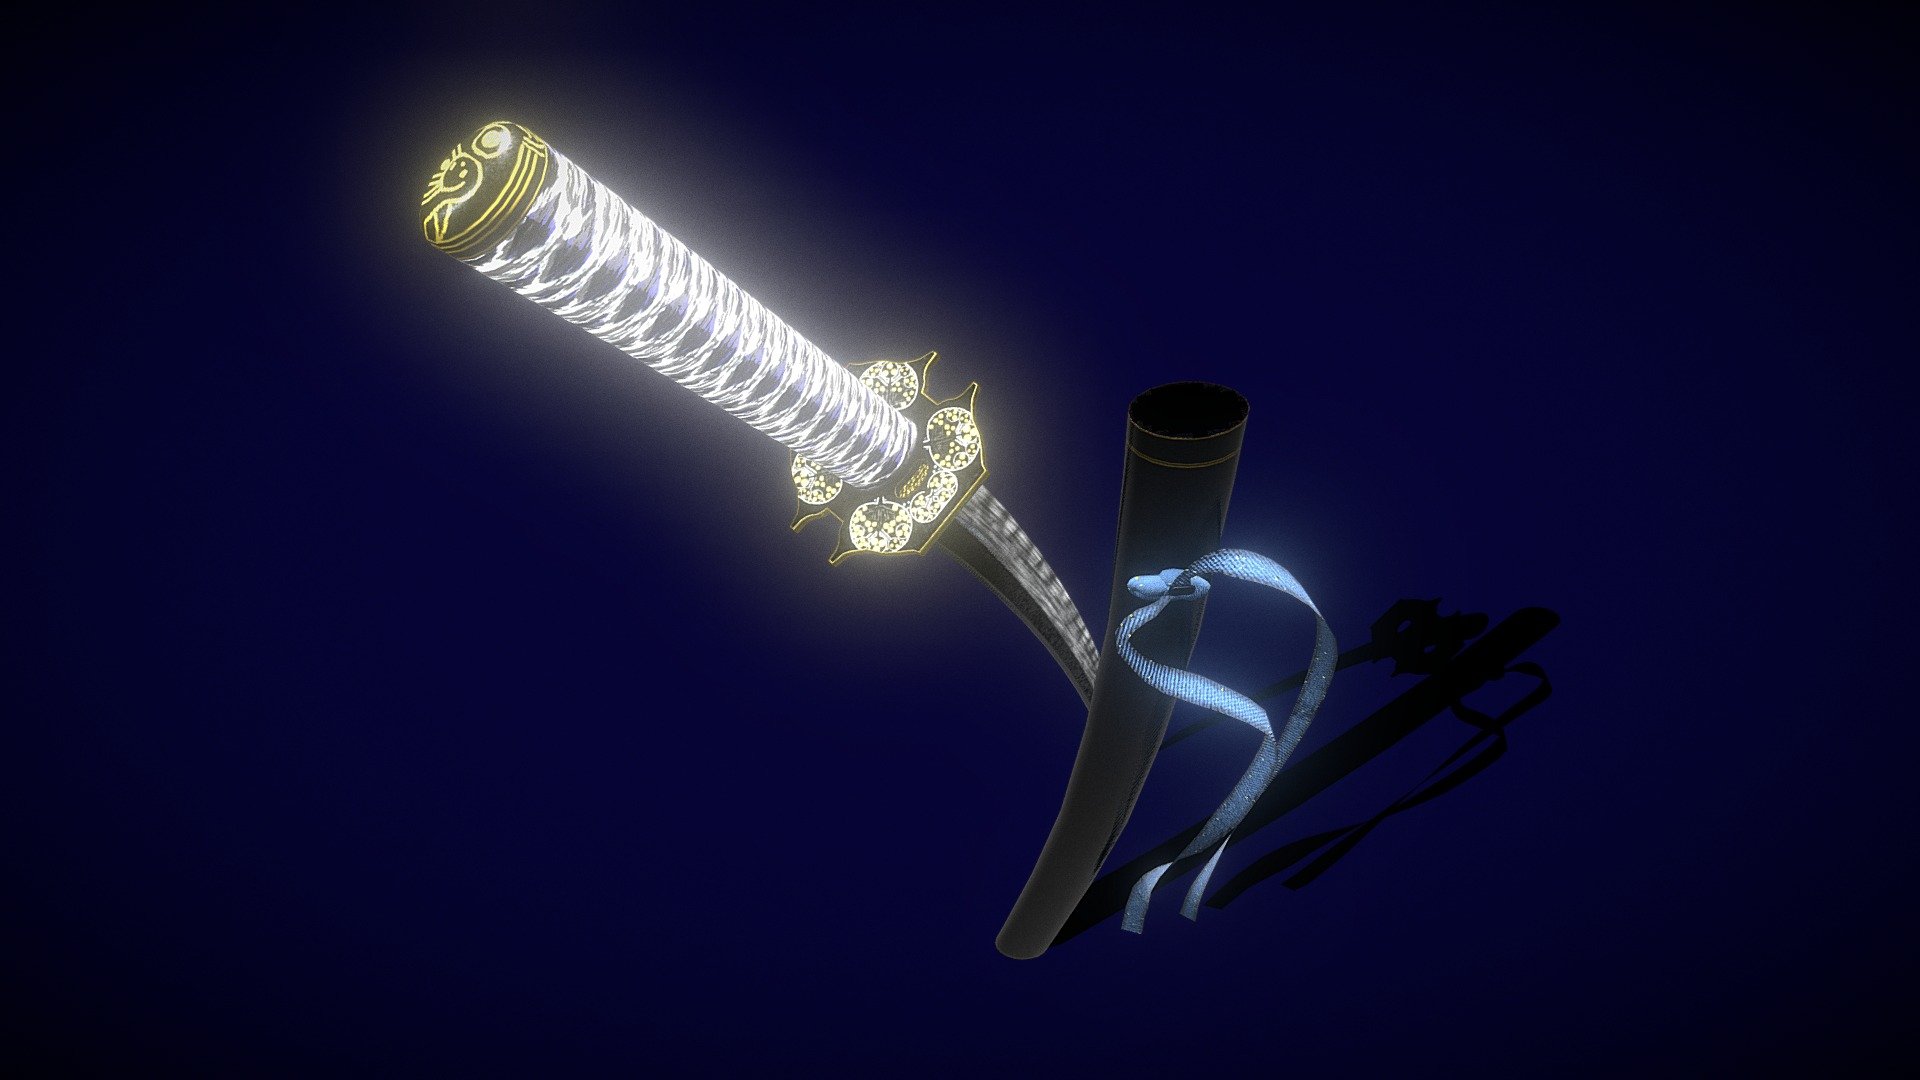 DMC Vergil Yamato Katana Version 2 Devil May Cry Sword Blade 